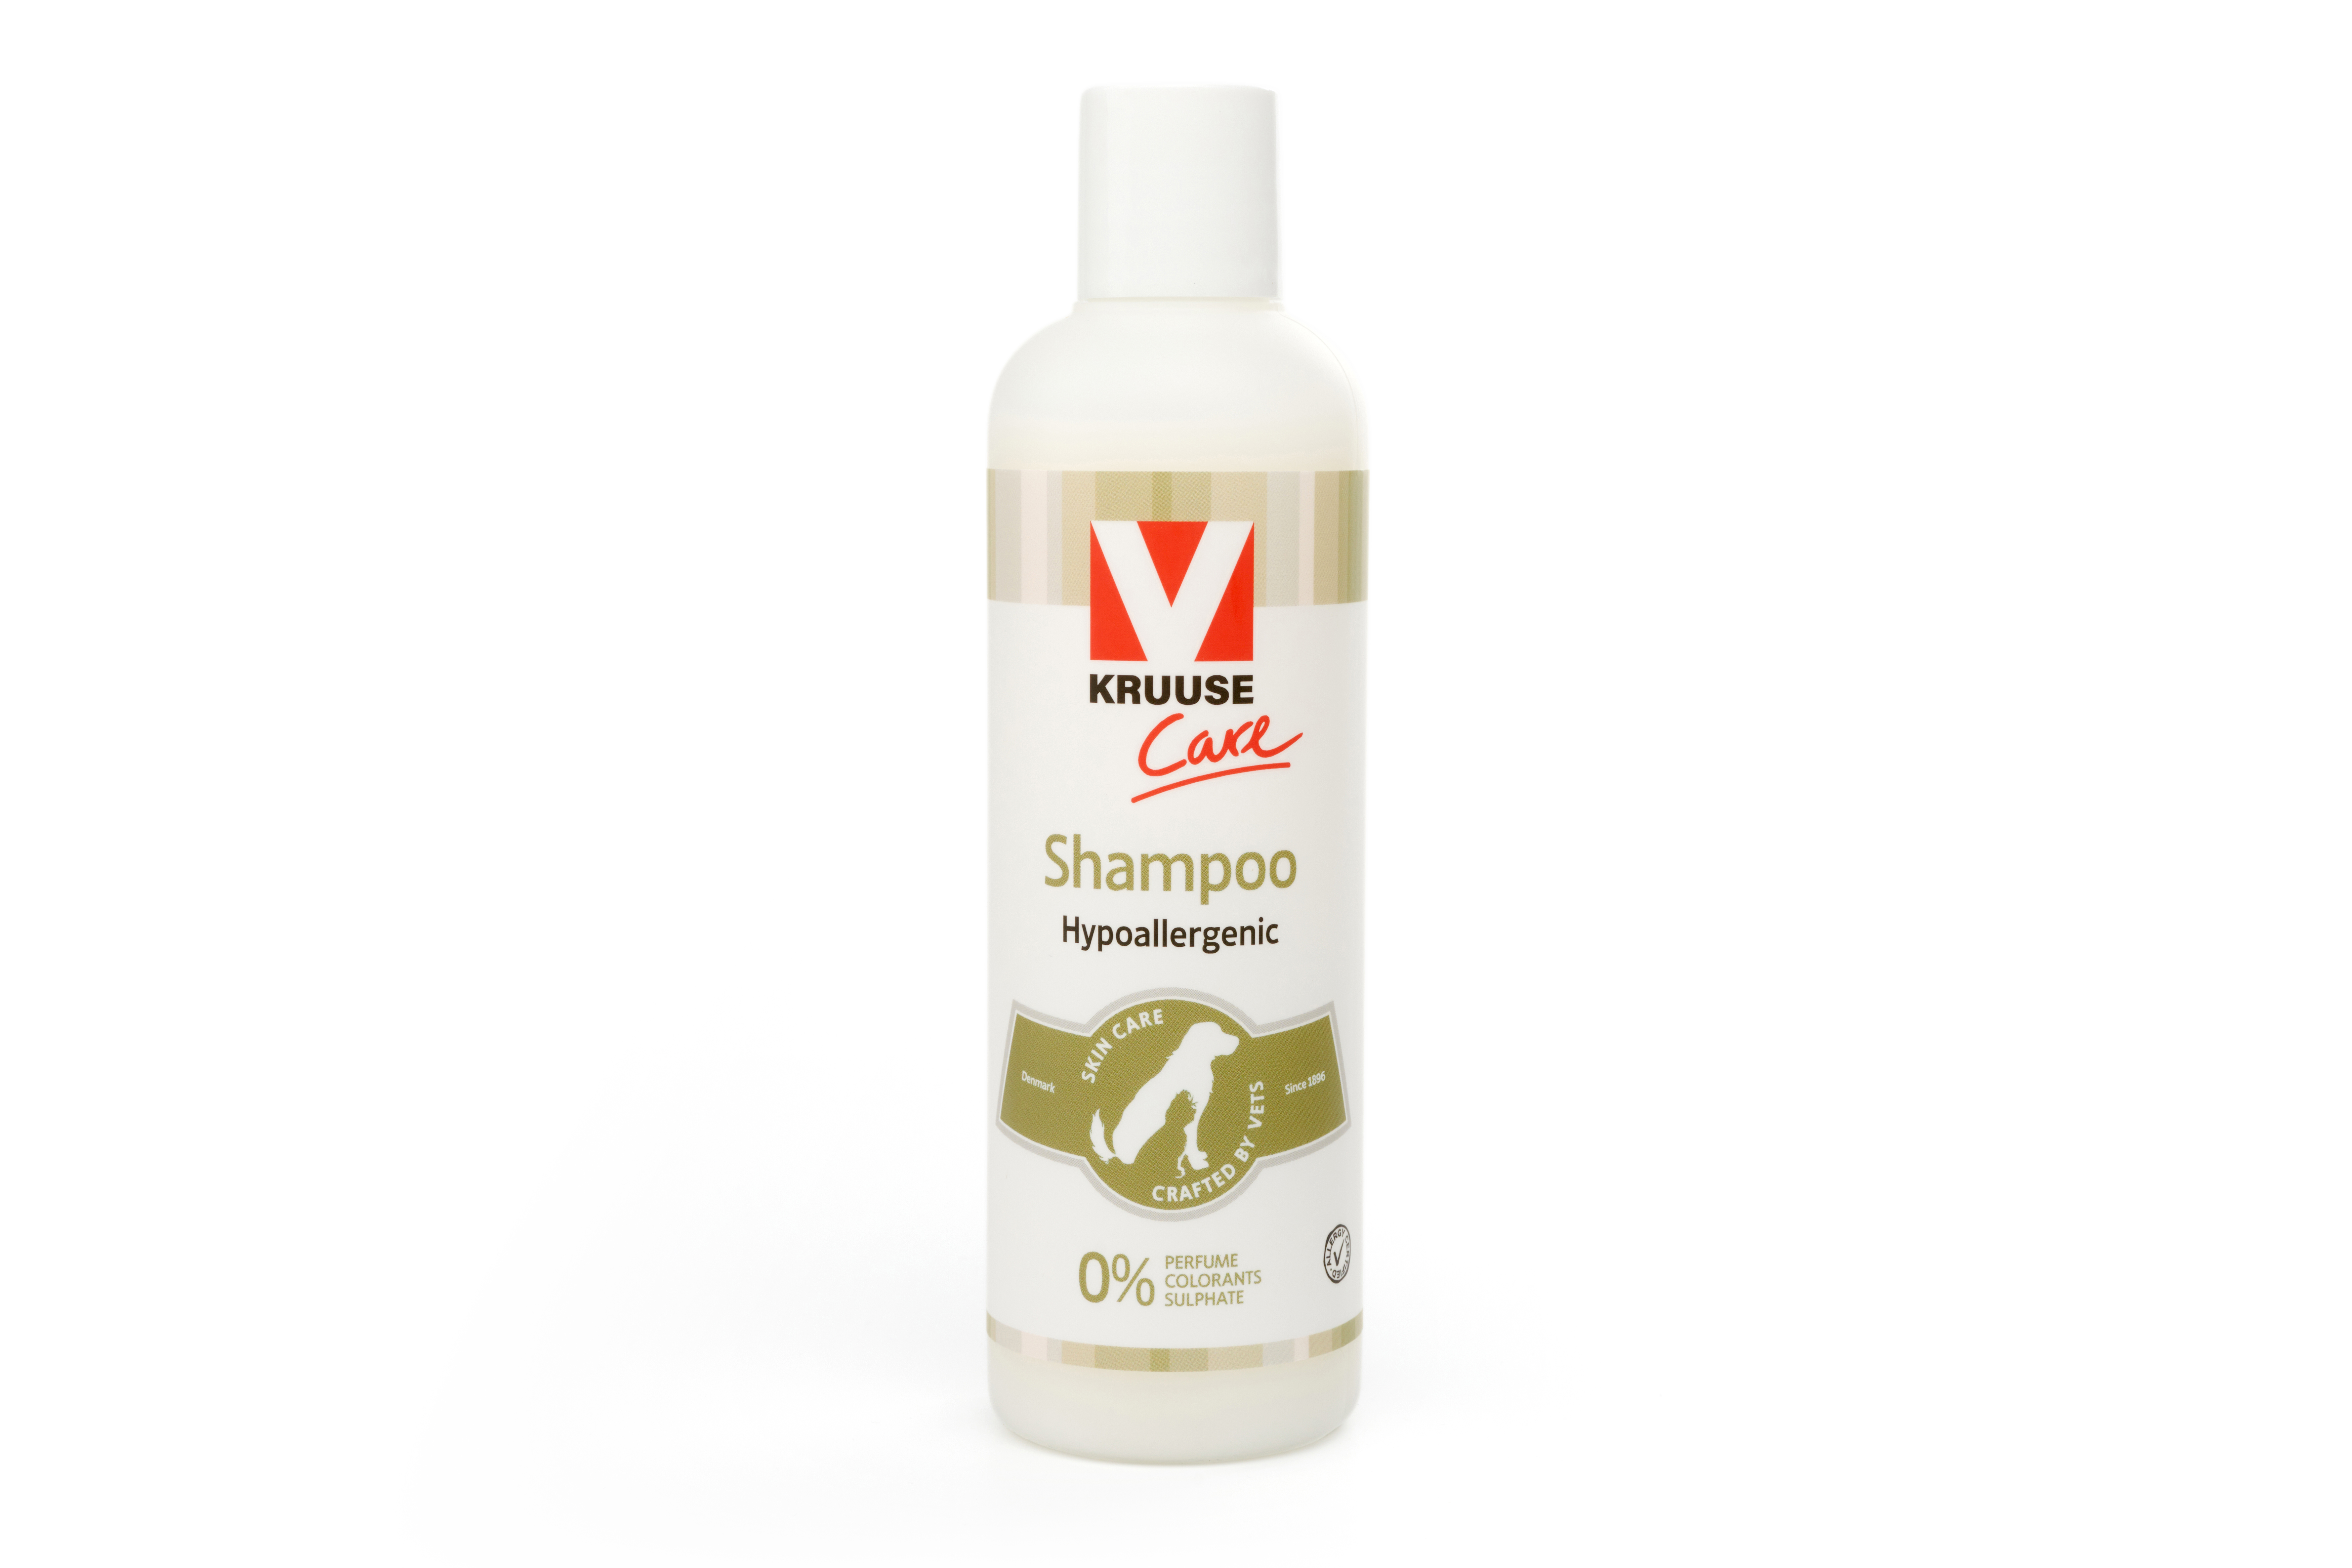 KRUUSE Care Hypoallergenic Shampoo, 250 ml